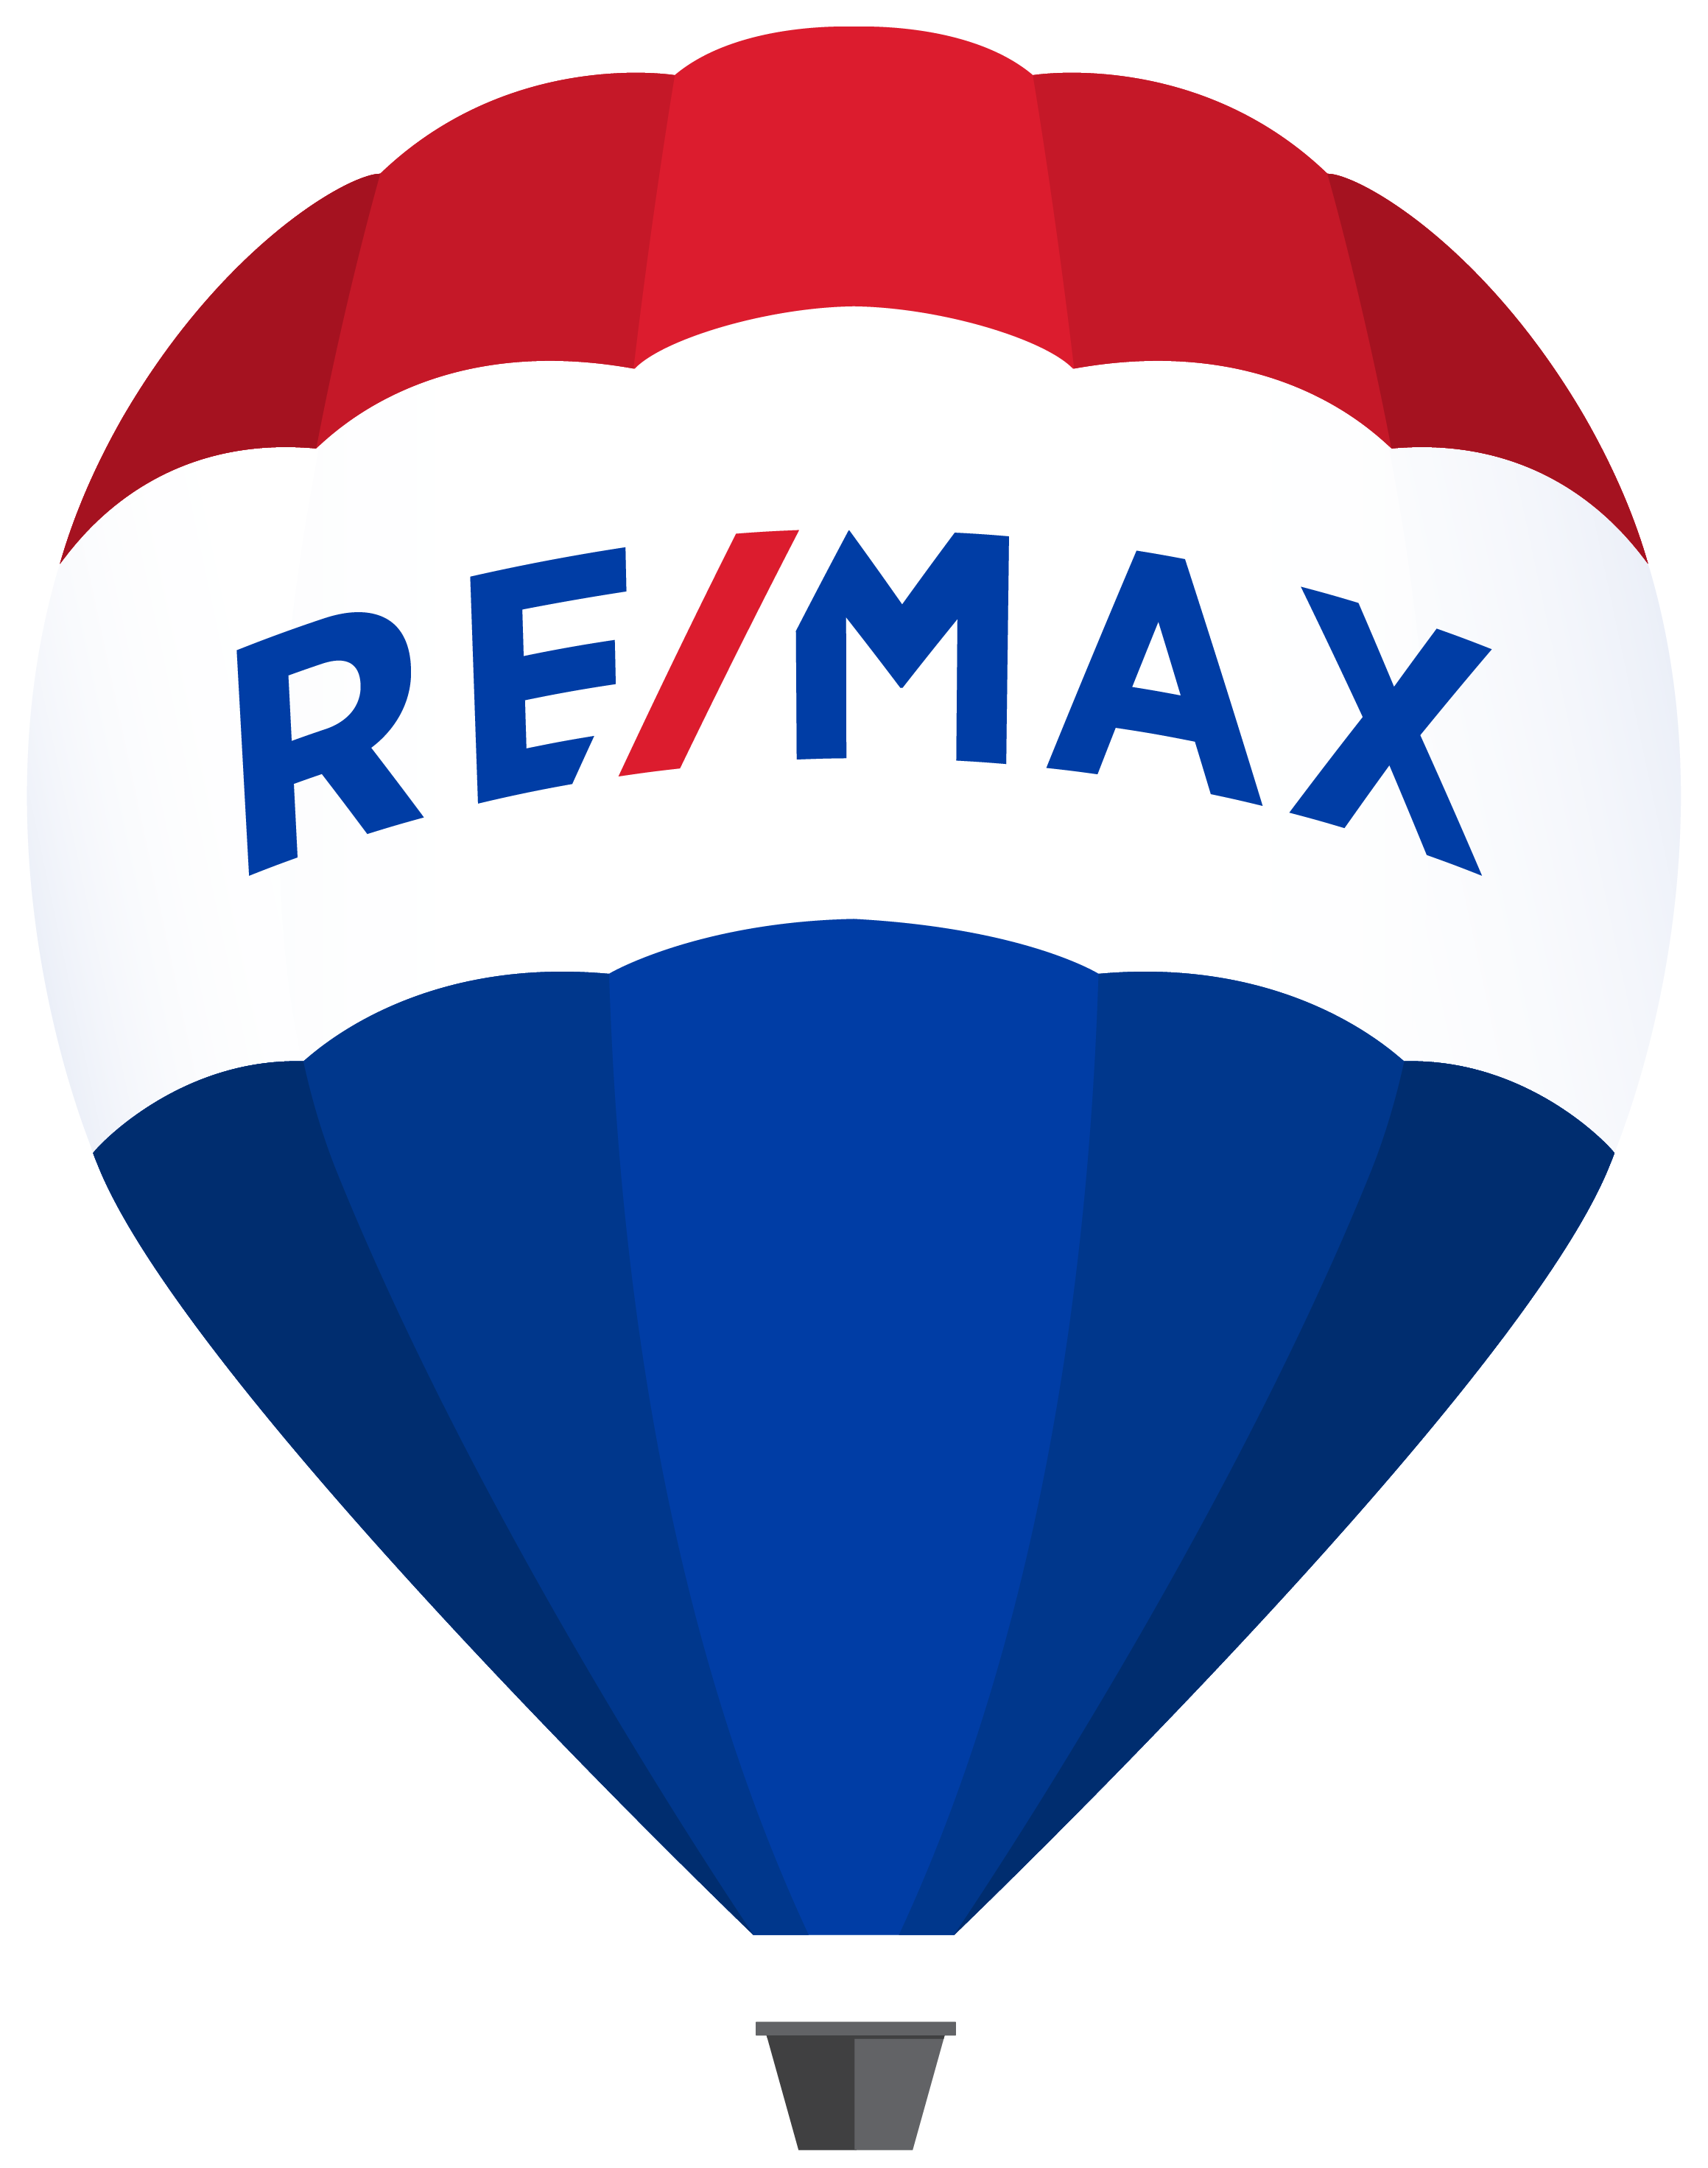 REMAX_Balloon_RGB.png